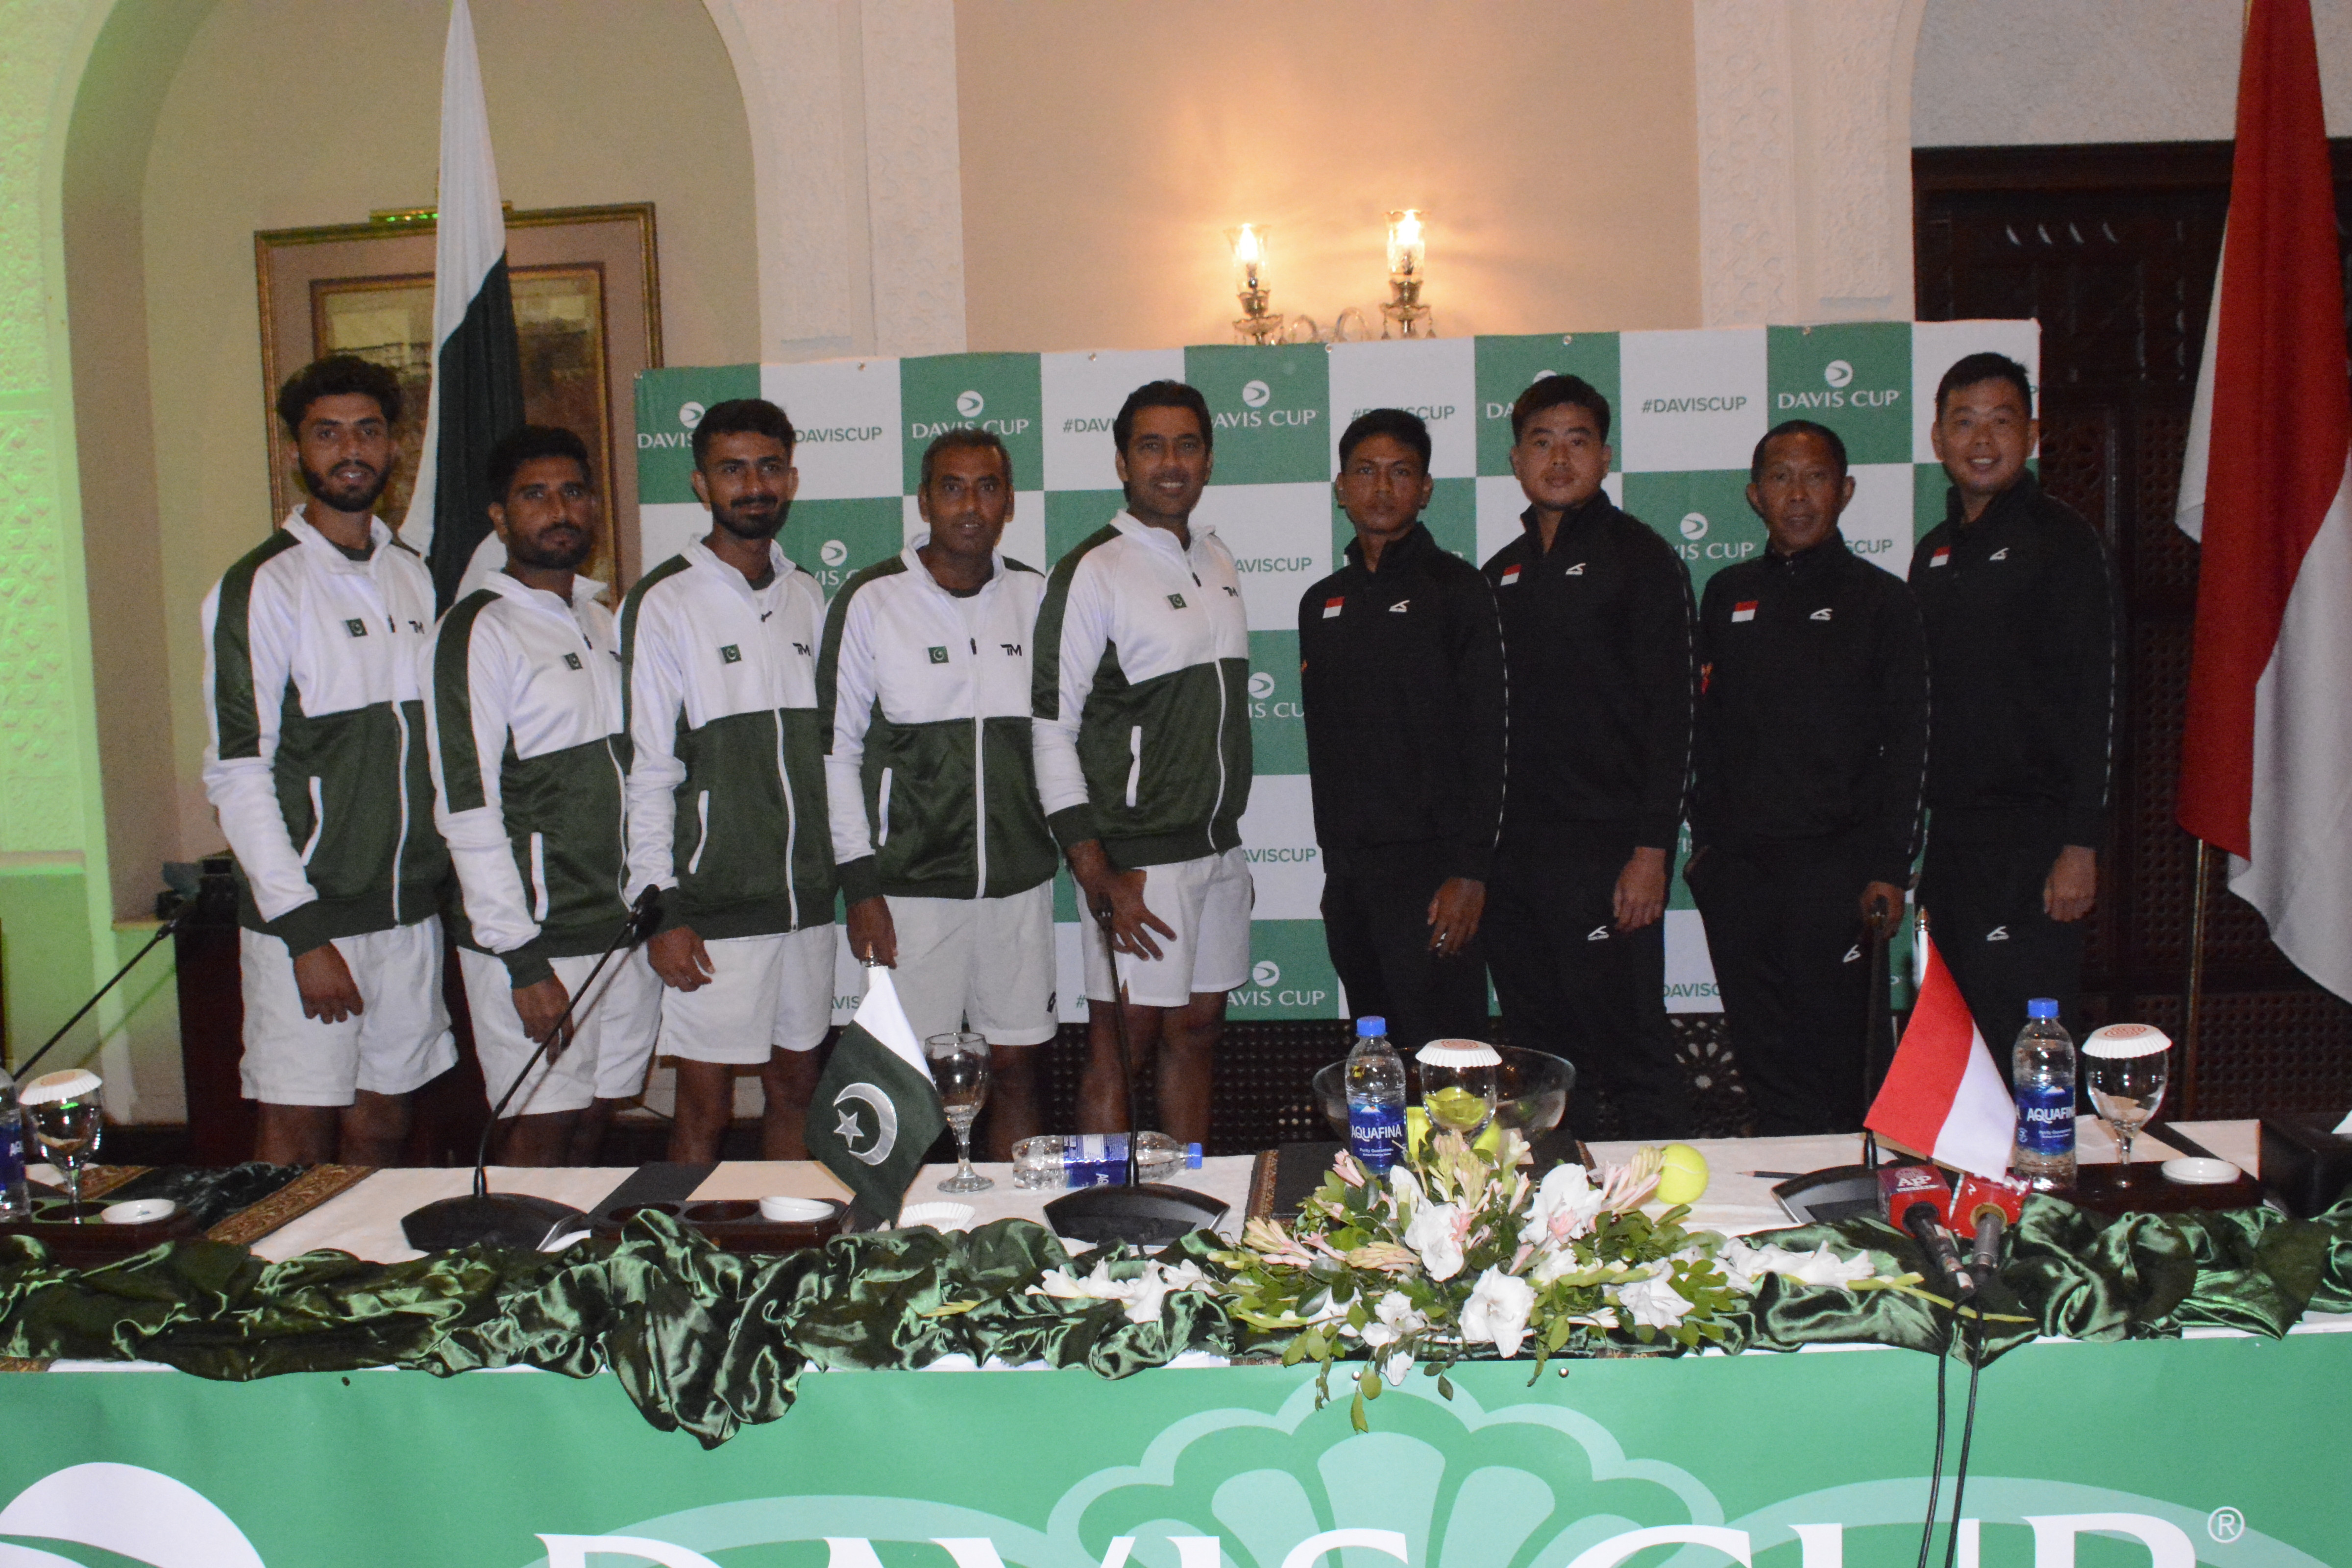 Pakistan menghadapi Indonesia dalam pertandingan penting Piala Davis hari ini